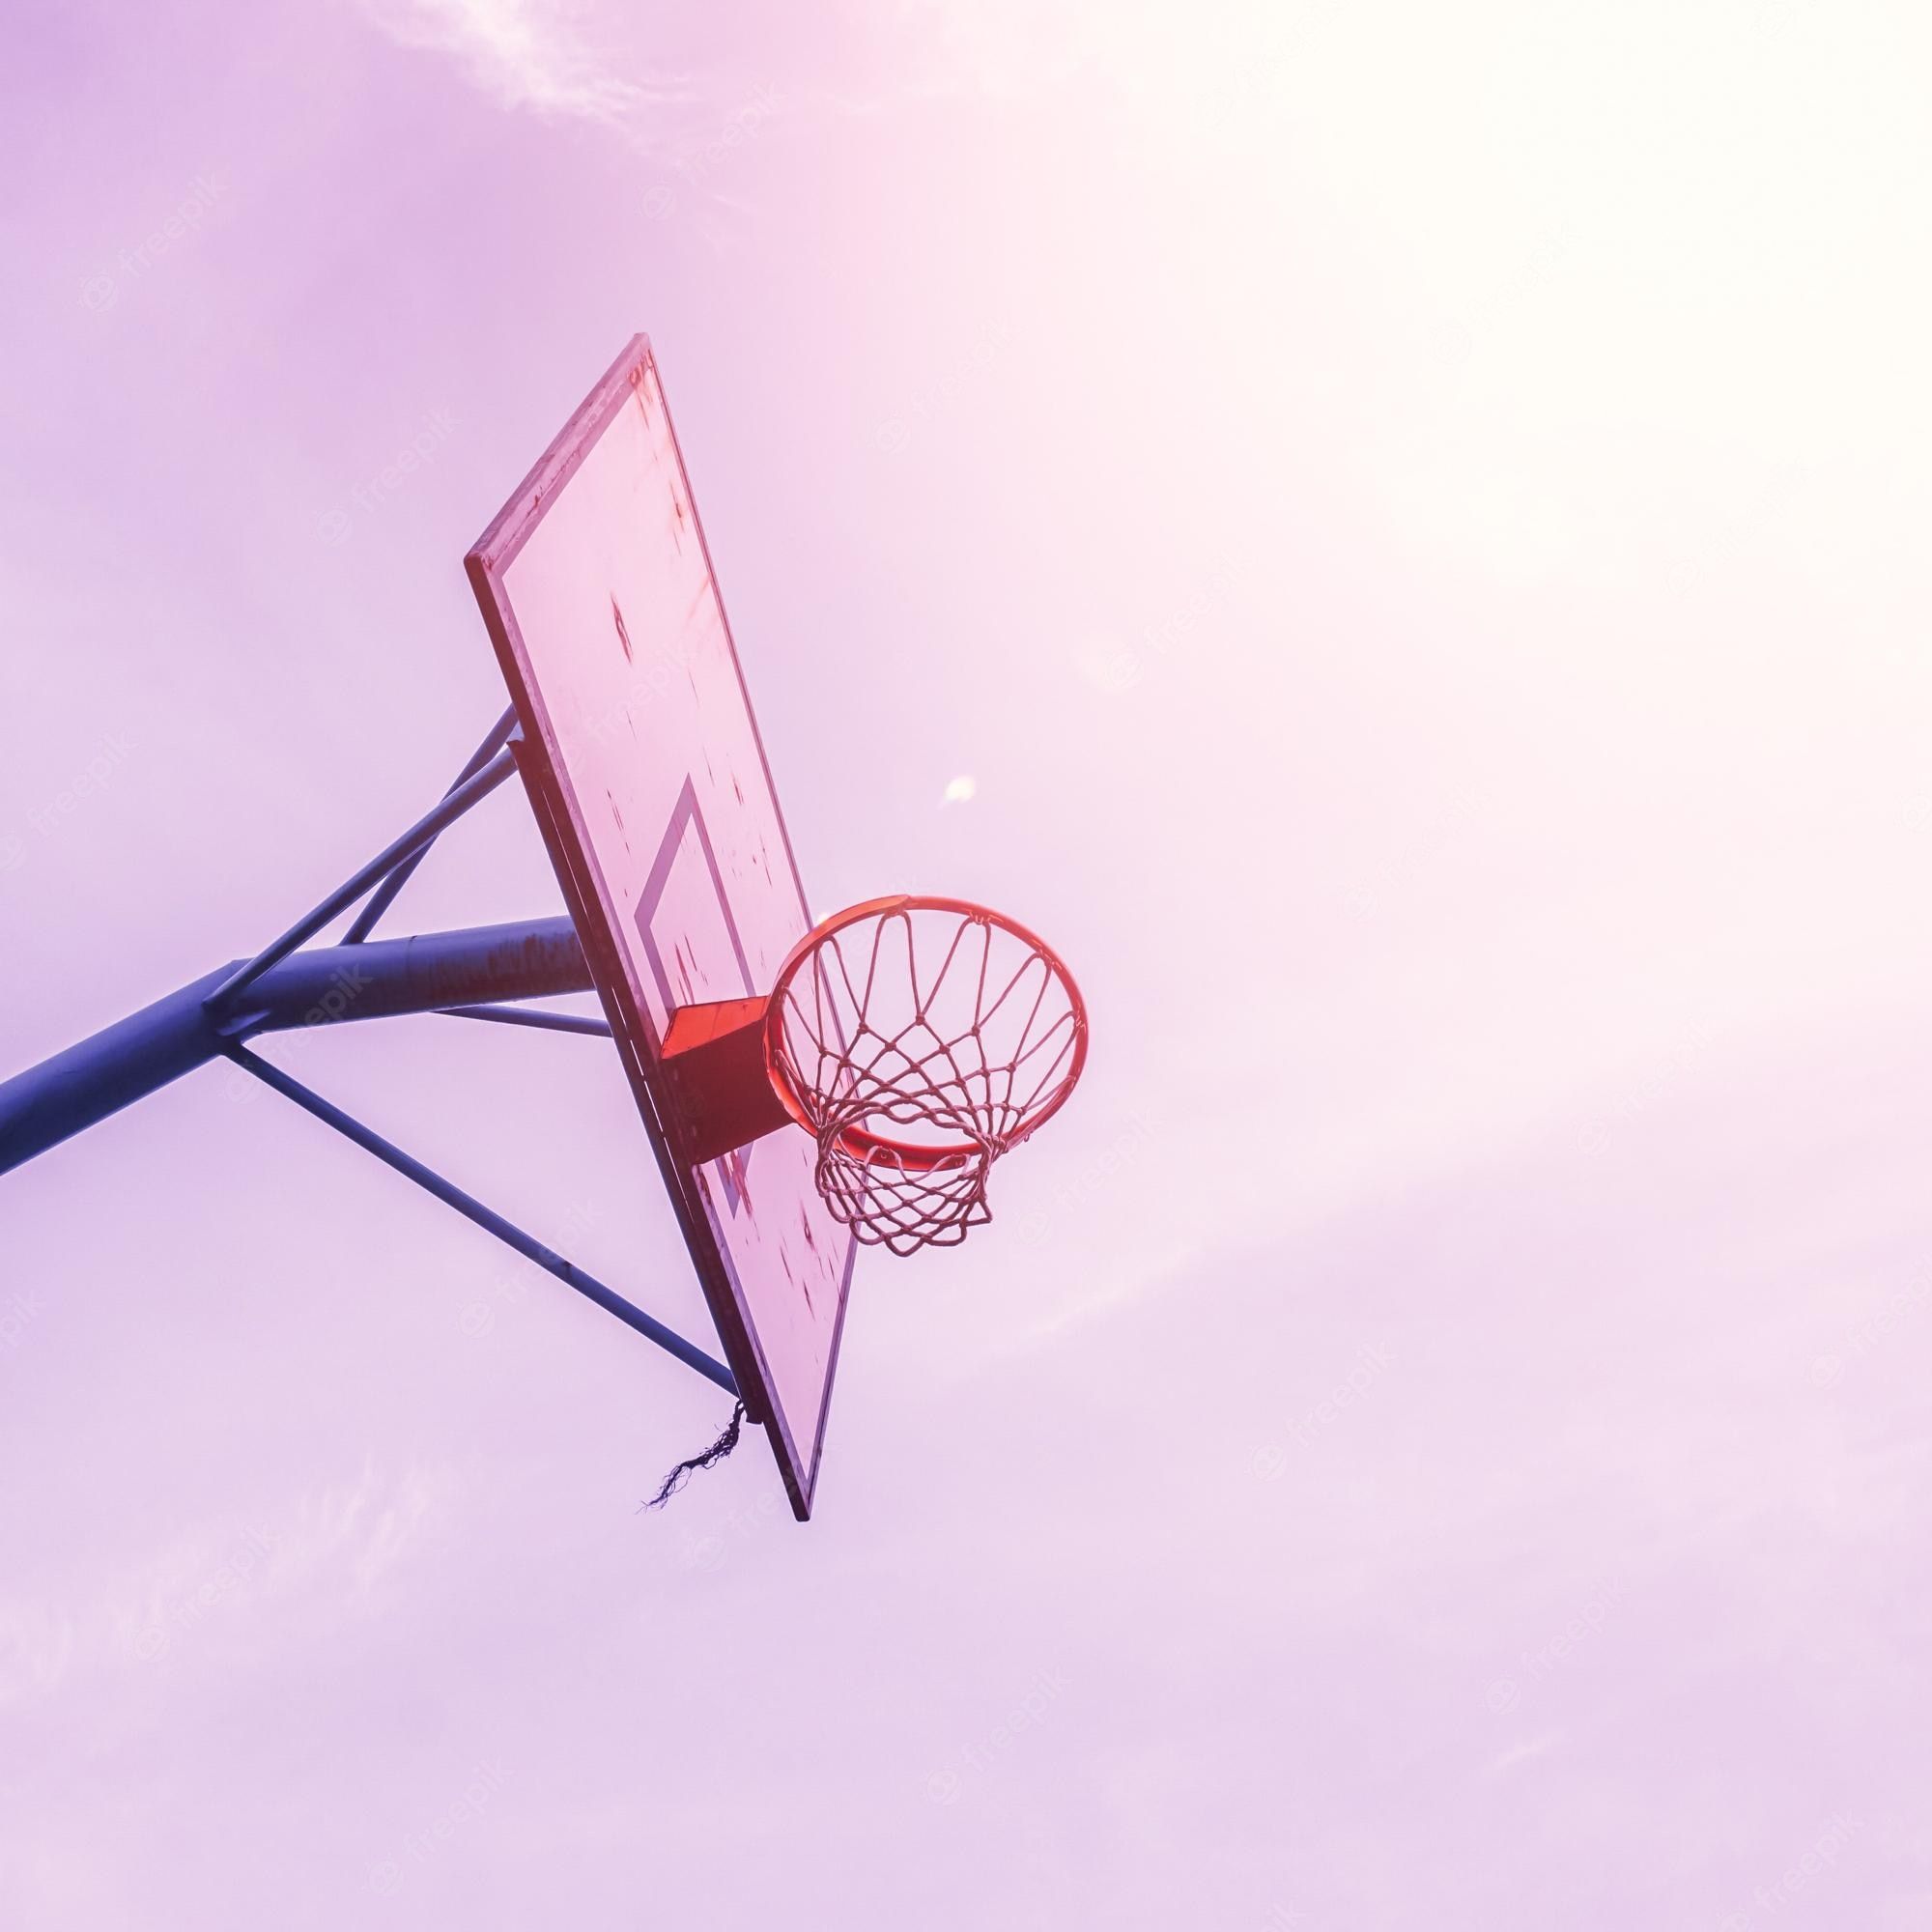 Premium Photo. Street basketball hoop, basket sport